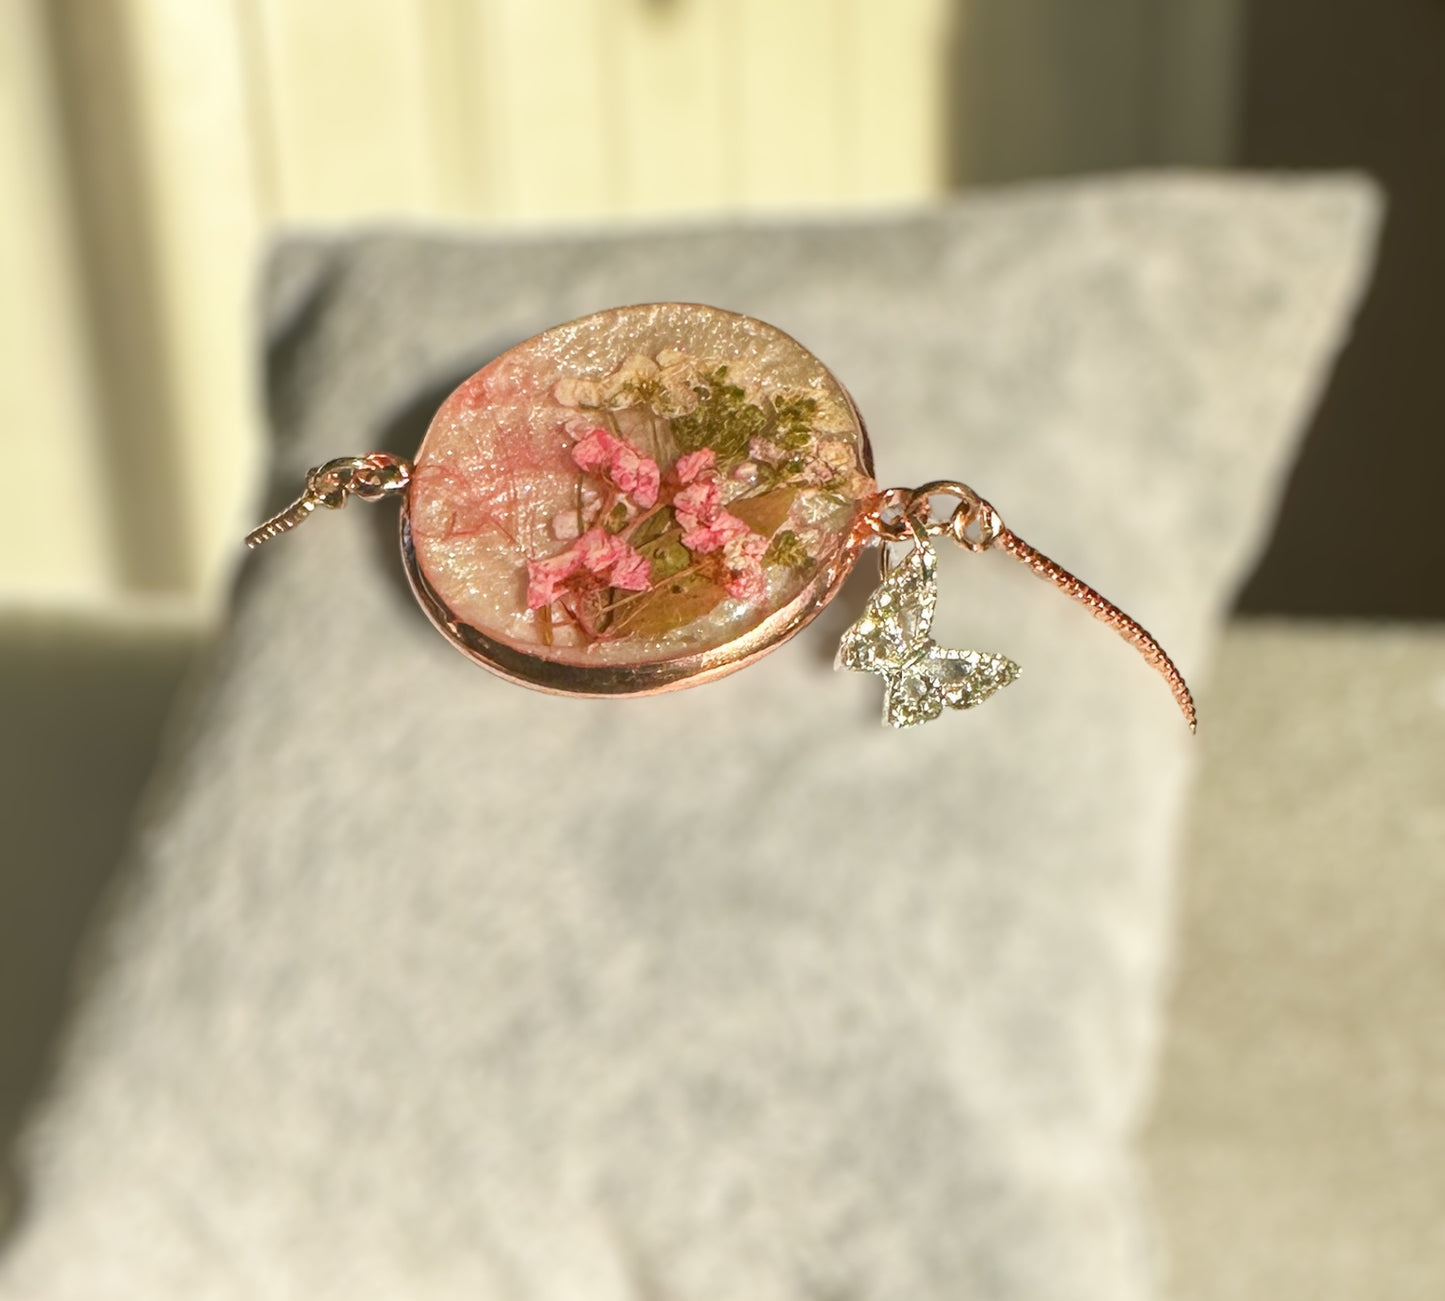 Fairy Garden Bracelet: Handmade Rose Gold Bracelet with Dried Flowers